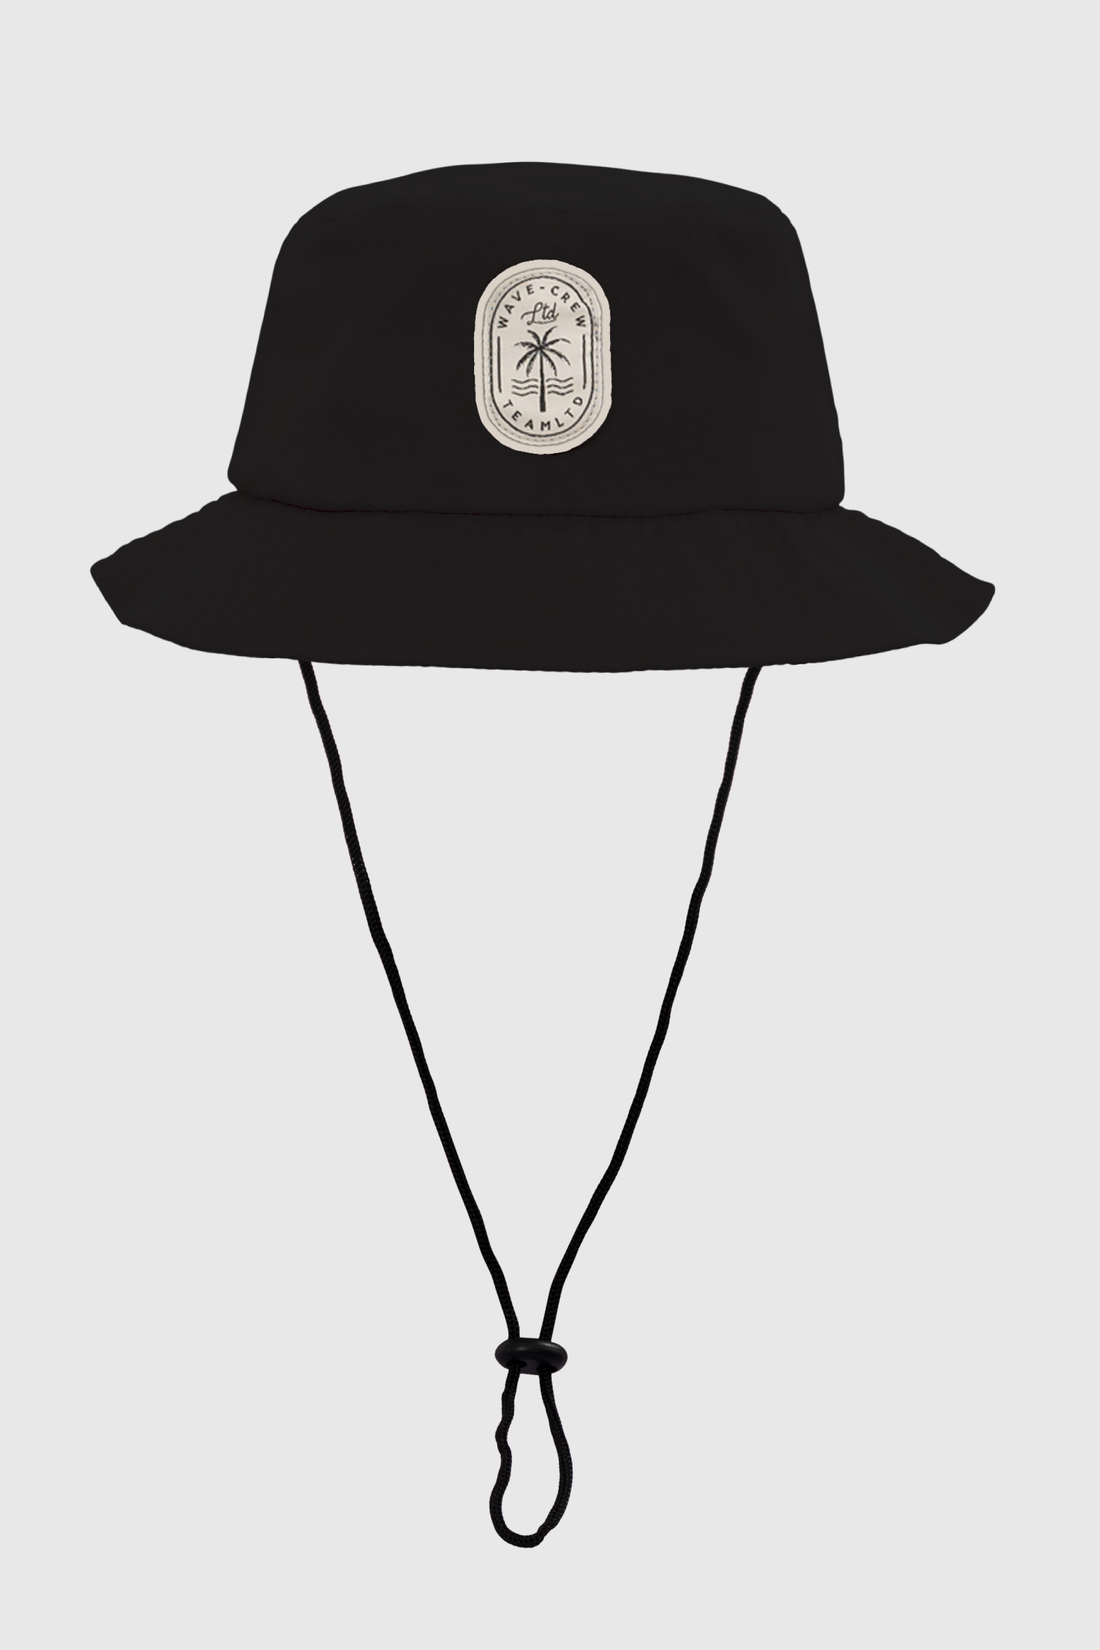 Ki-8jcud Black Top Hat Women Sun Hat Wide Brim Beach Hat Adjustable Bucket Hat Summer Hats Men's Cool Bucket Hat Vintage Bucket Hat Black Women's